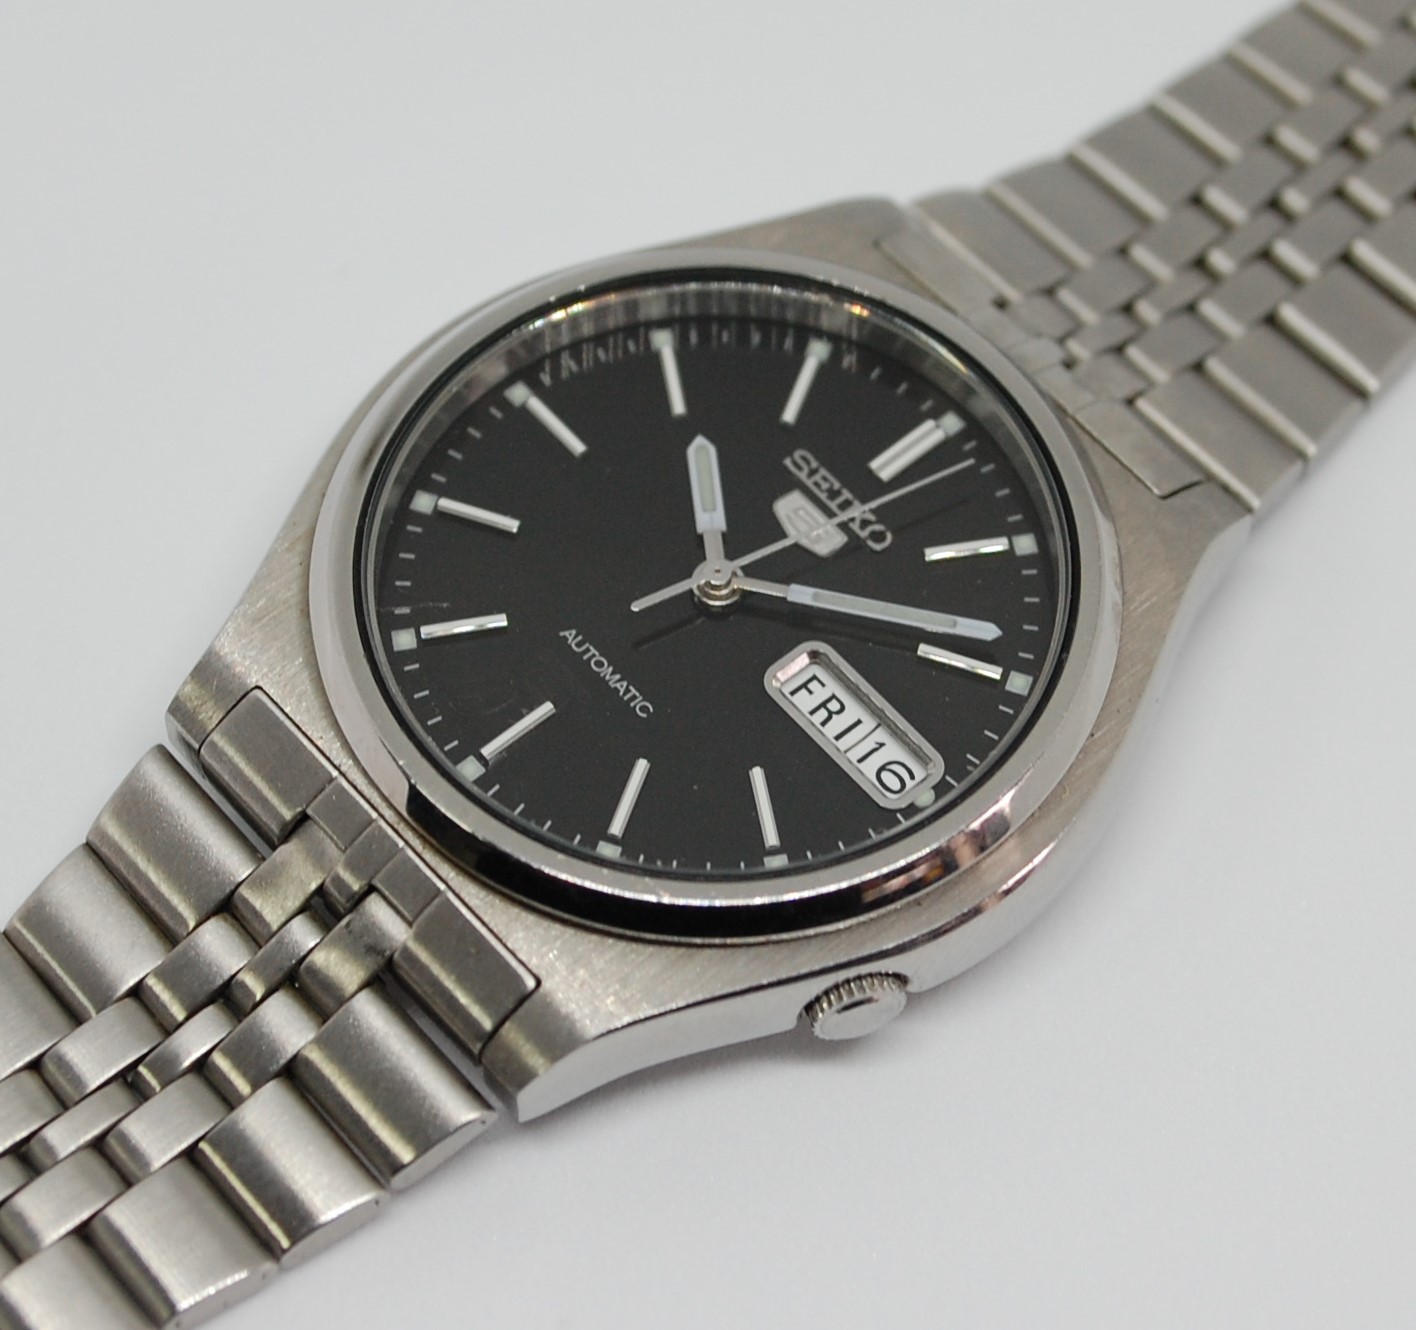 SOLD 1998 Seiko 5 auto 7S26-3170 - Birth Year Watches